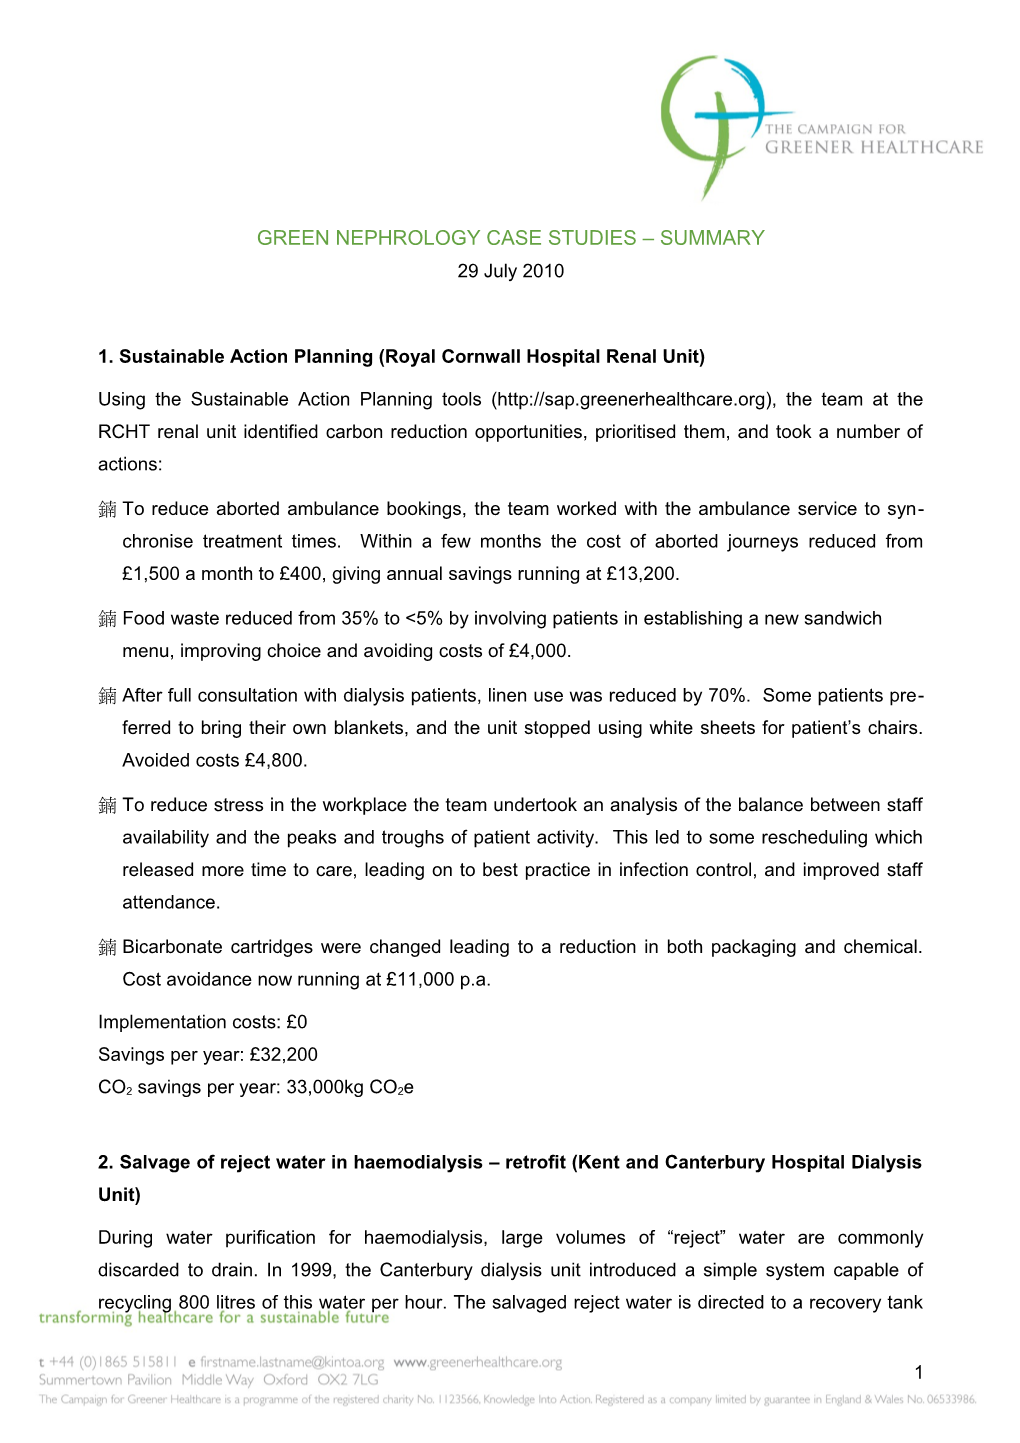 Green Nephrology Case Studies Summary